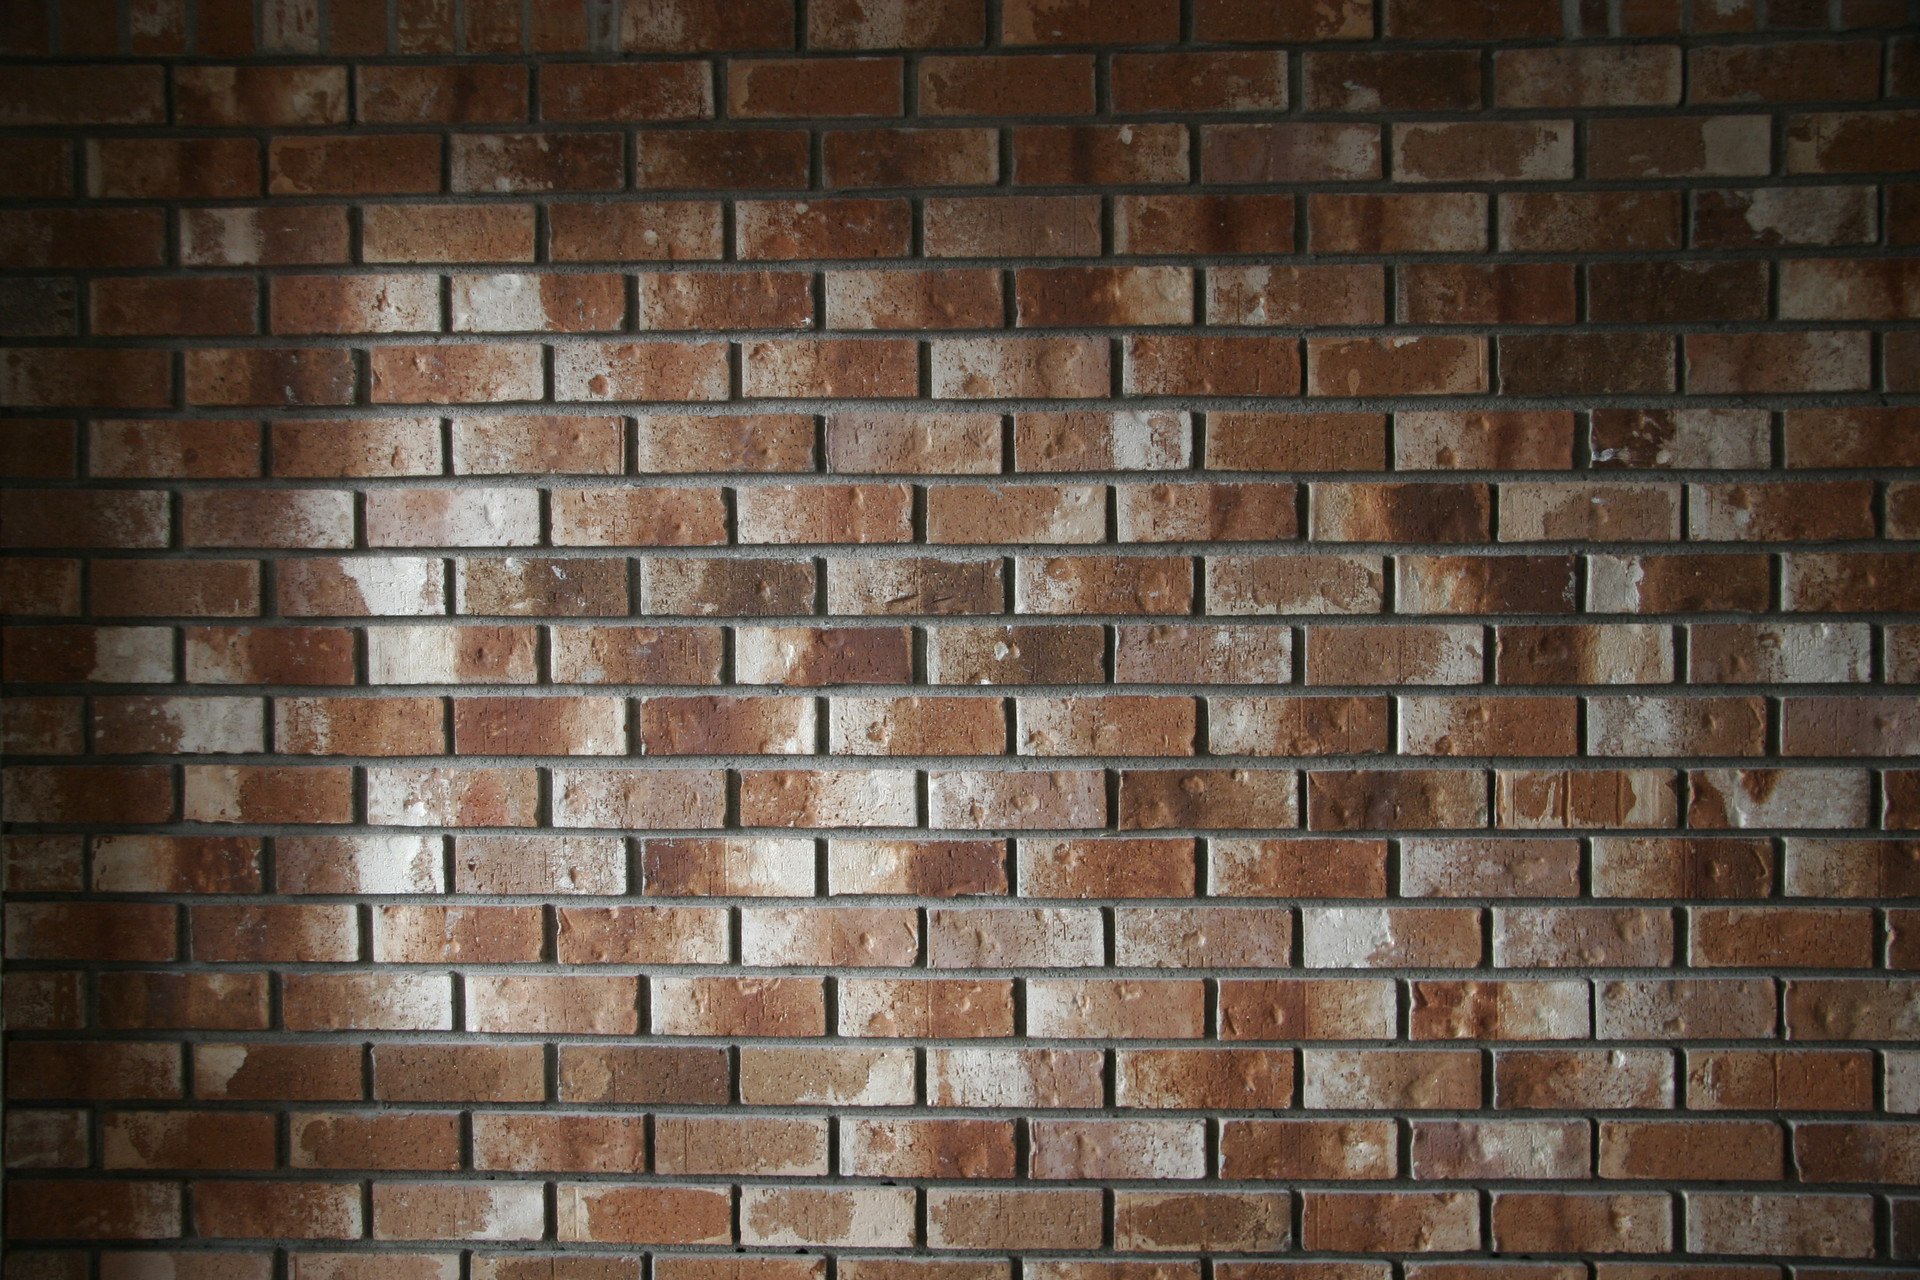  Brick  HD Wallpaper  Background Image 1920x1280 ID 